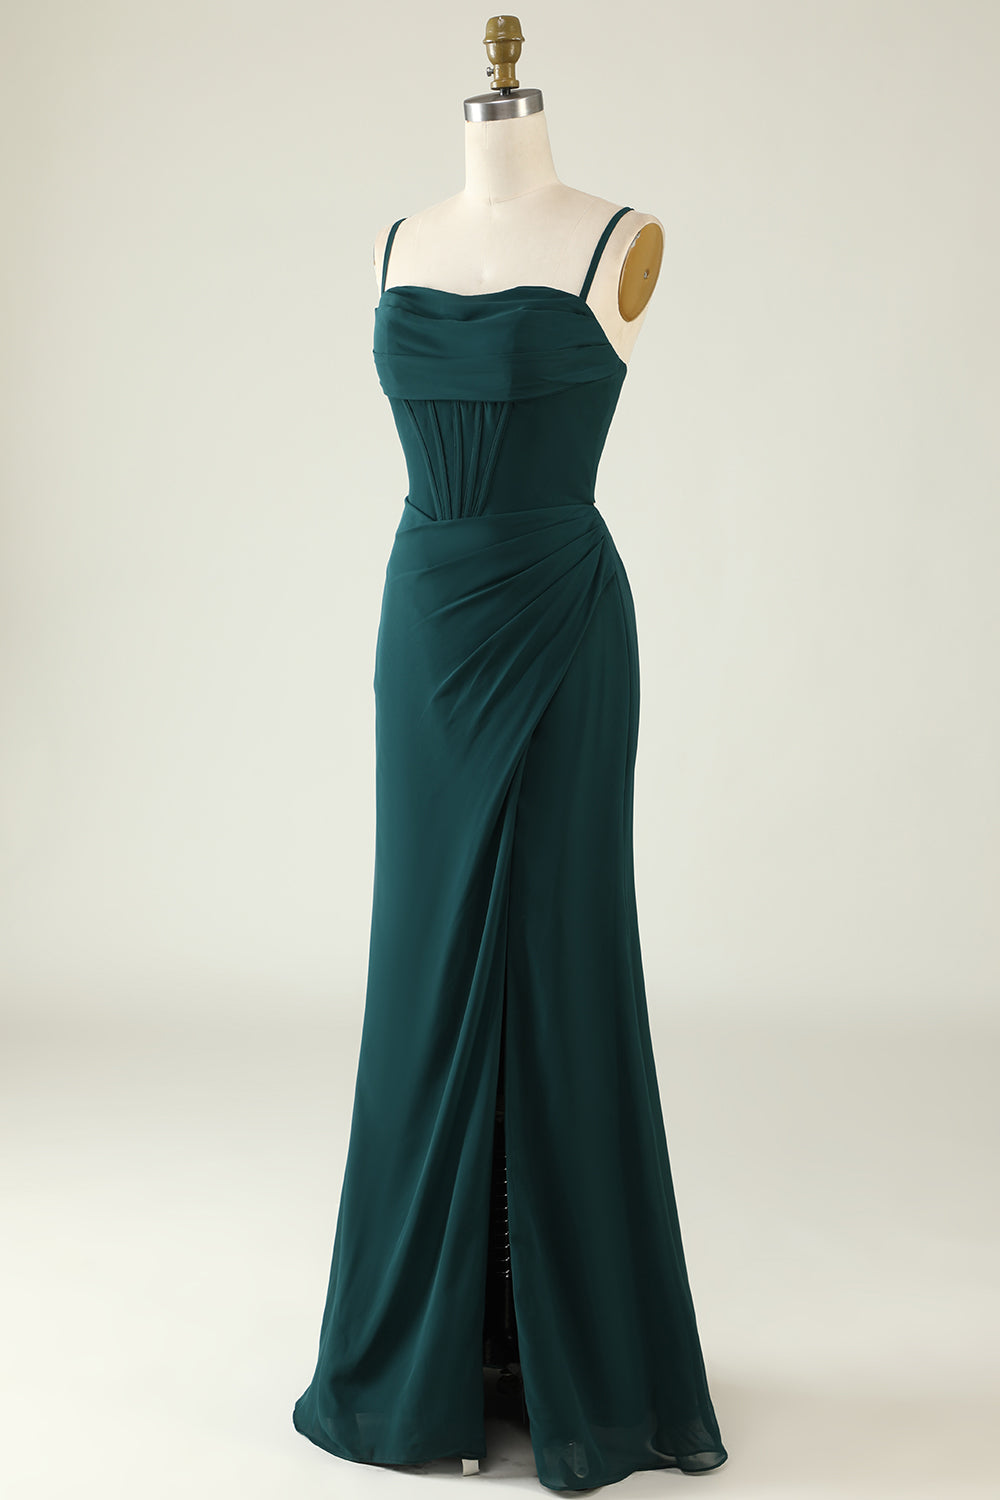 Prom Dress Size 14, Dark Green Spaghetti Straps Wedding Guest Dress with Slit